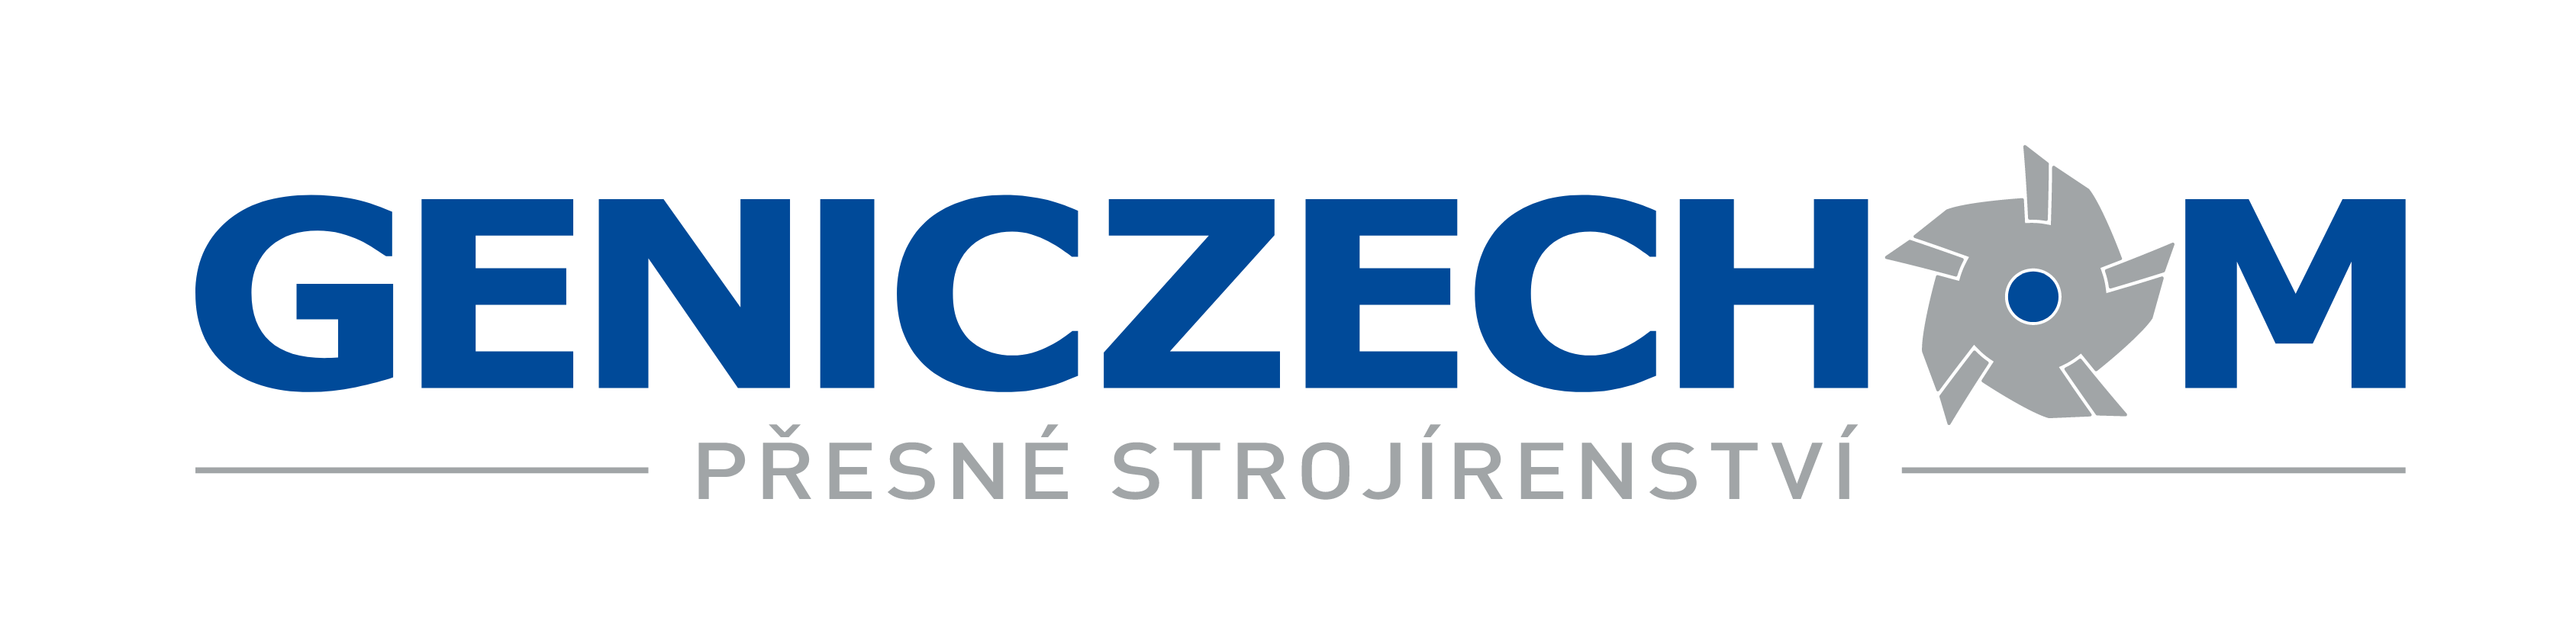 Geniczech-M logo